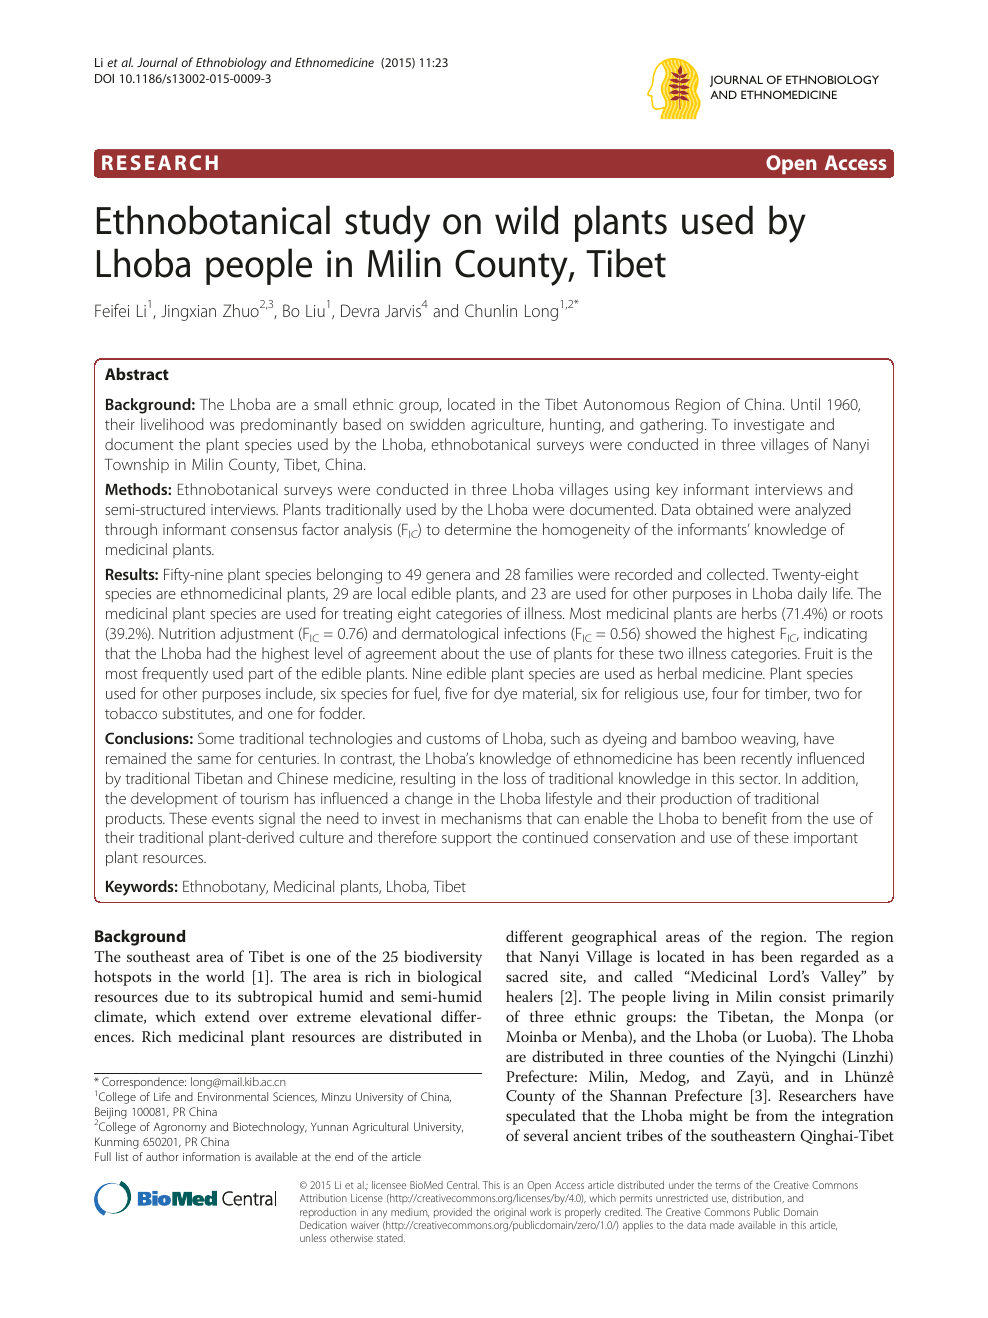 Ethnobotanical Study On Wild Plants Used By Lhoba People In - 